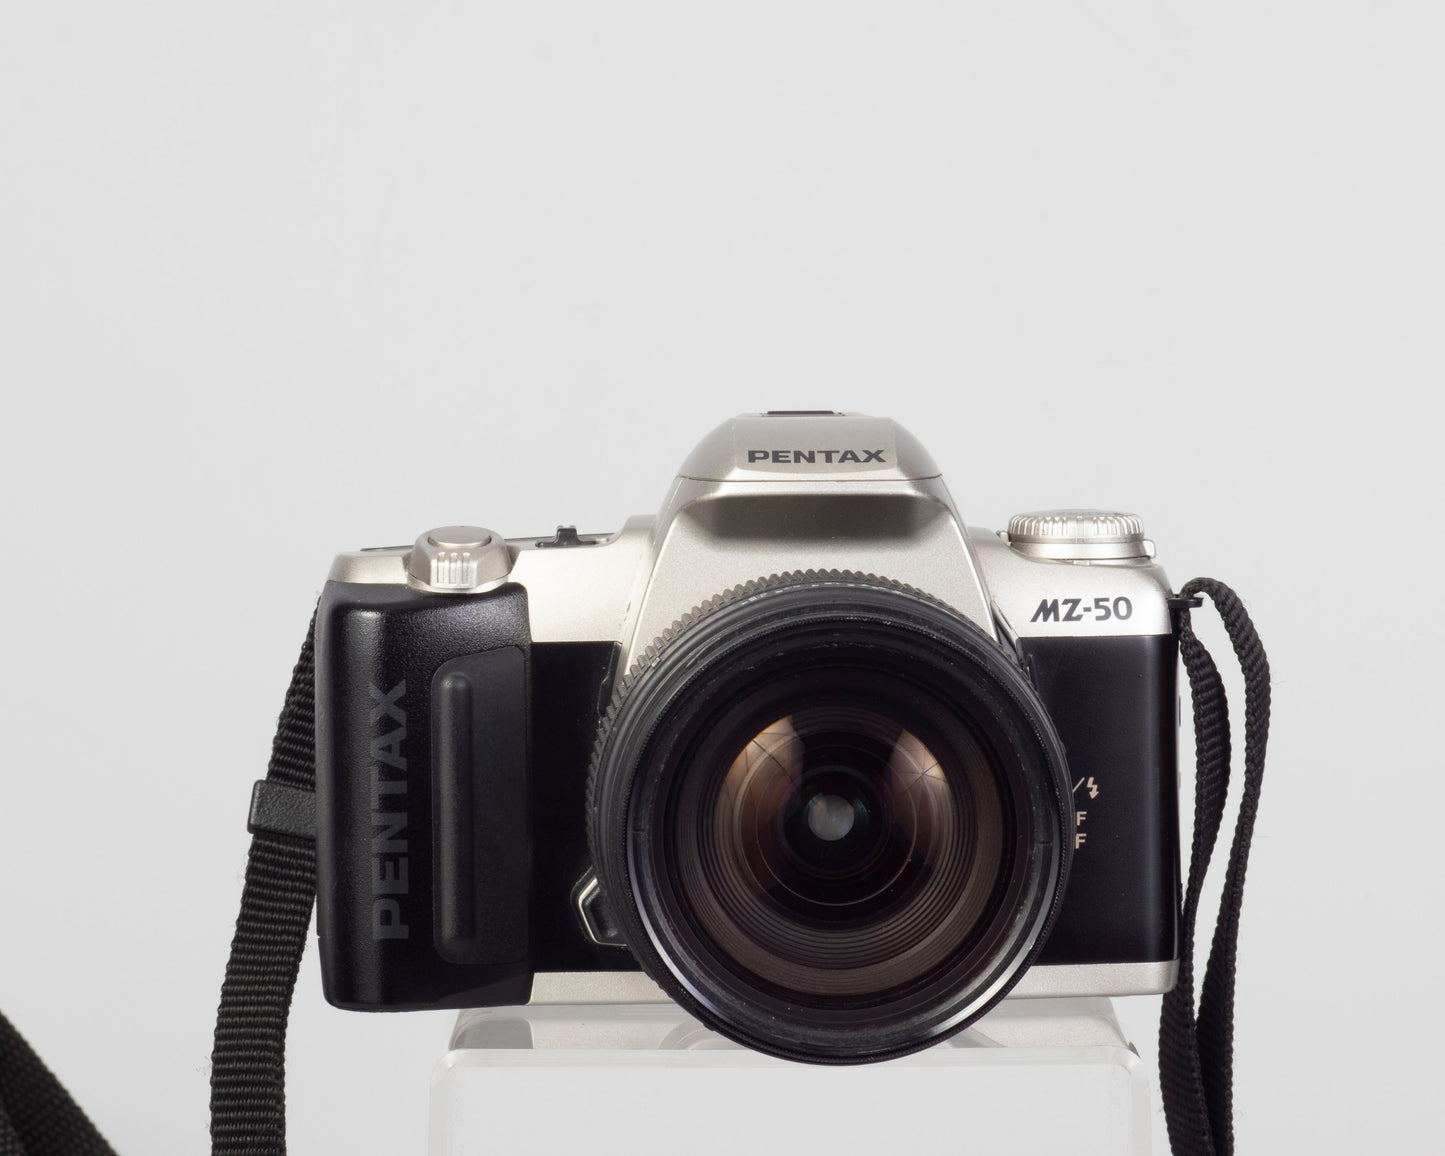 The Pentax MZ-50 35mm autofocus SLR camera